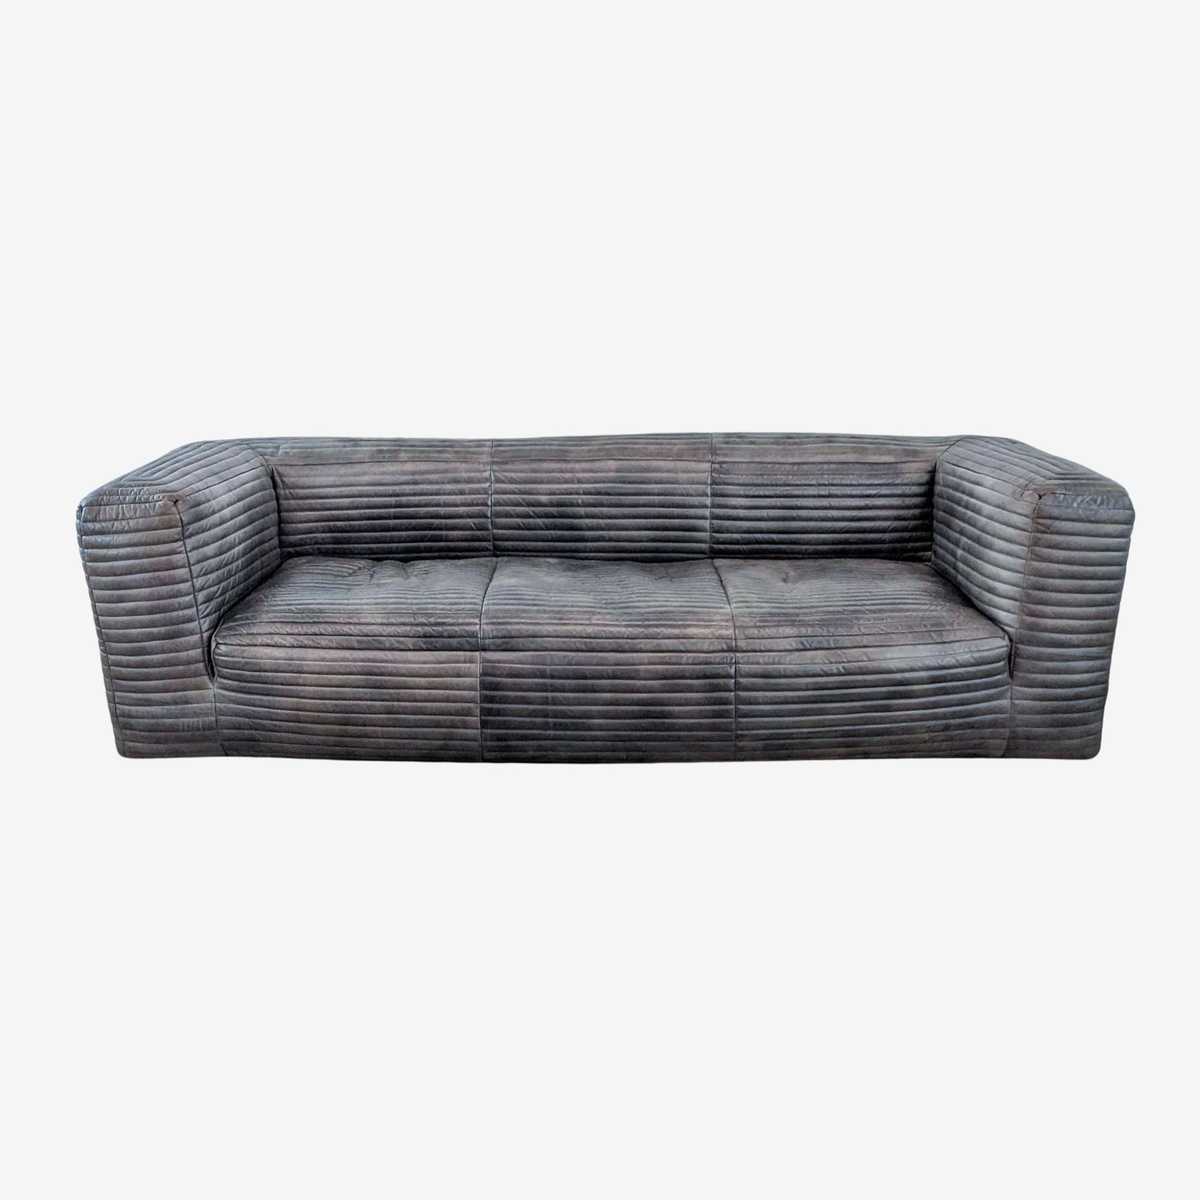 Halo Asian Leather Sofa - Kashew